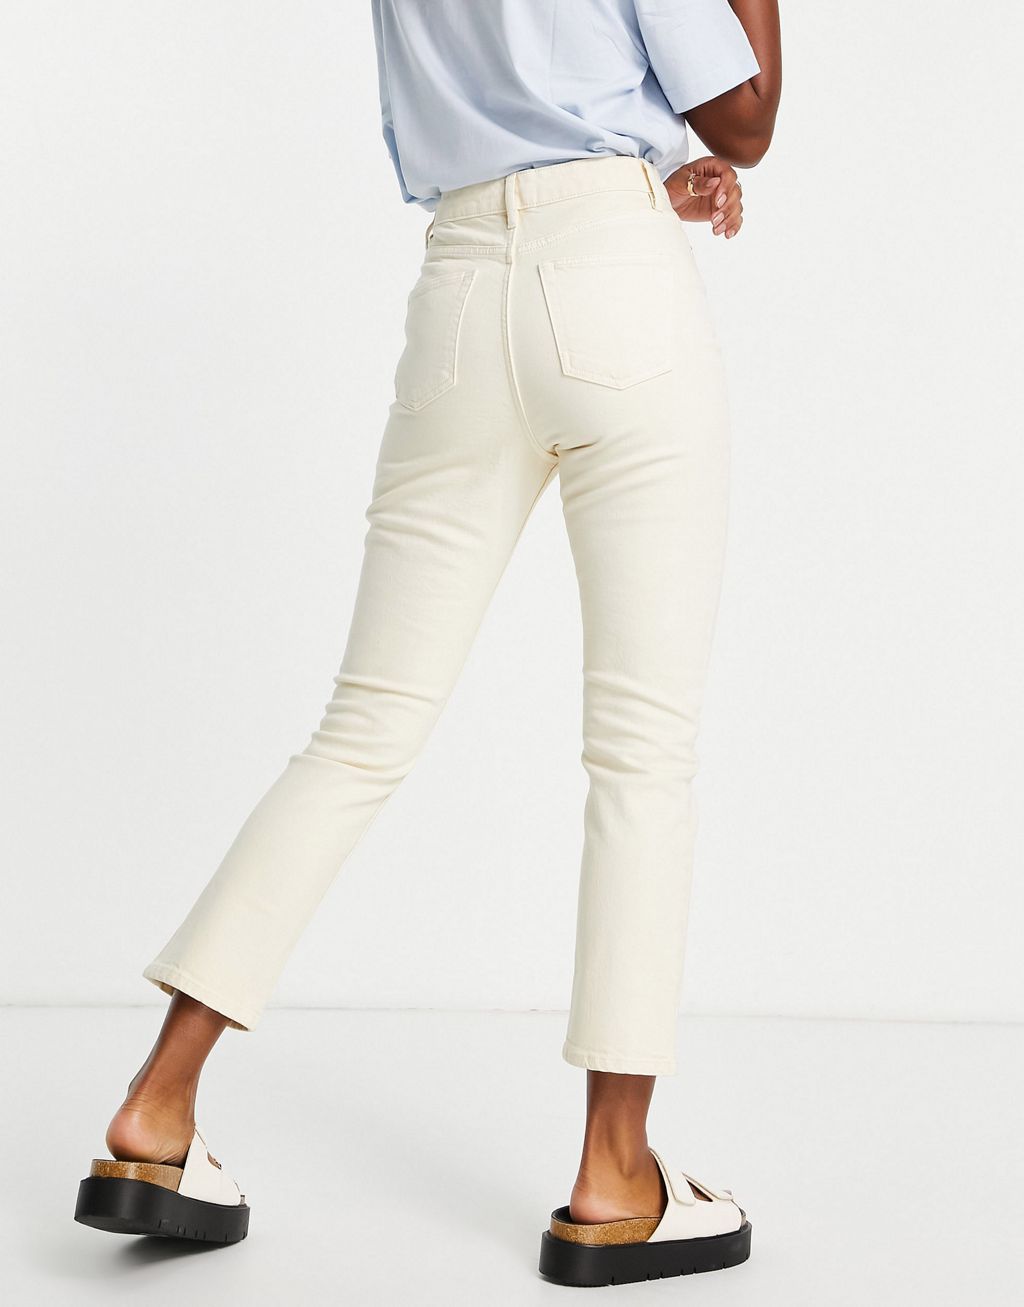 Jeans by Miss Selfridge Wear, wash, repeat High rise Belt loops Five pockets Slim mom fit